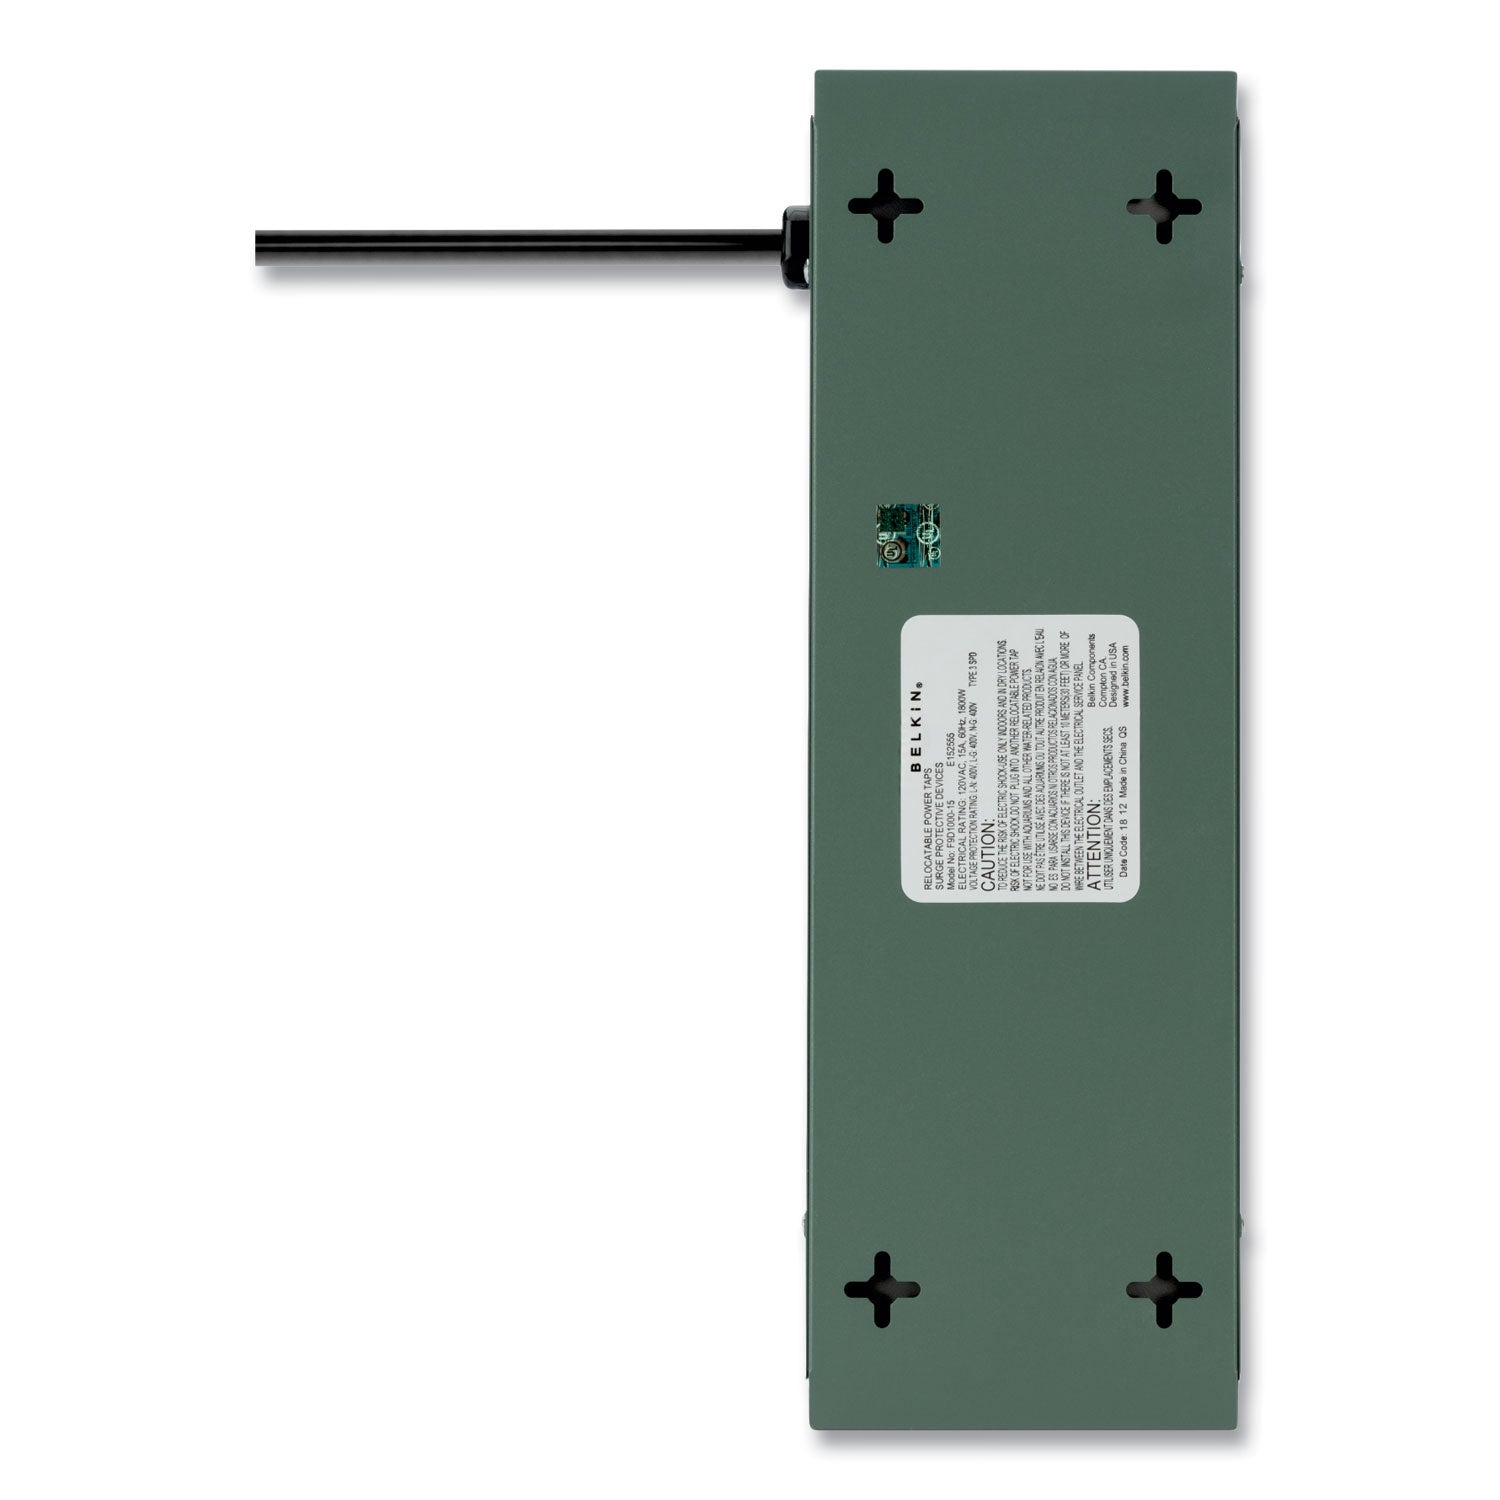 metal-surgemaster-surge-protector-10-ac-outlets-15-ft-cord-885-j-dark-gray_blkf9d100015 - 3